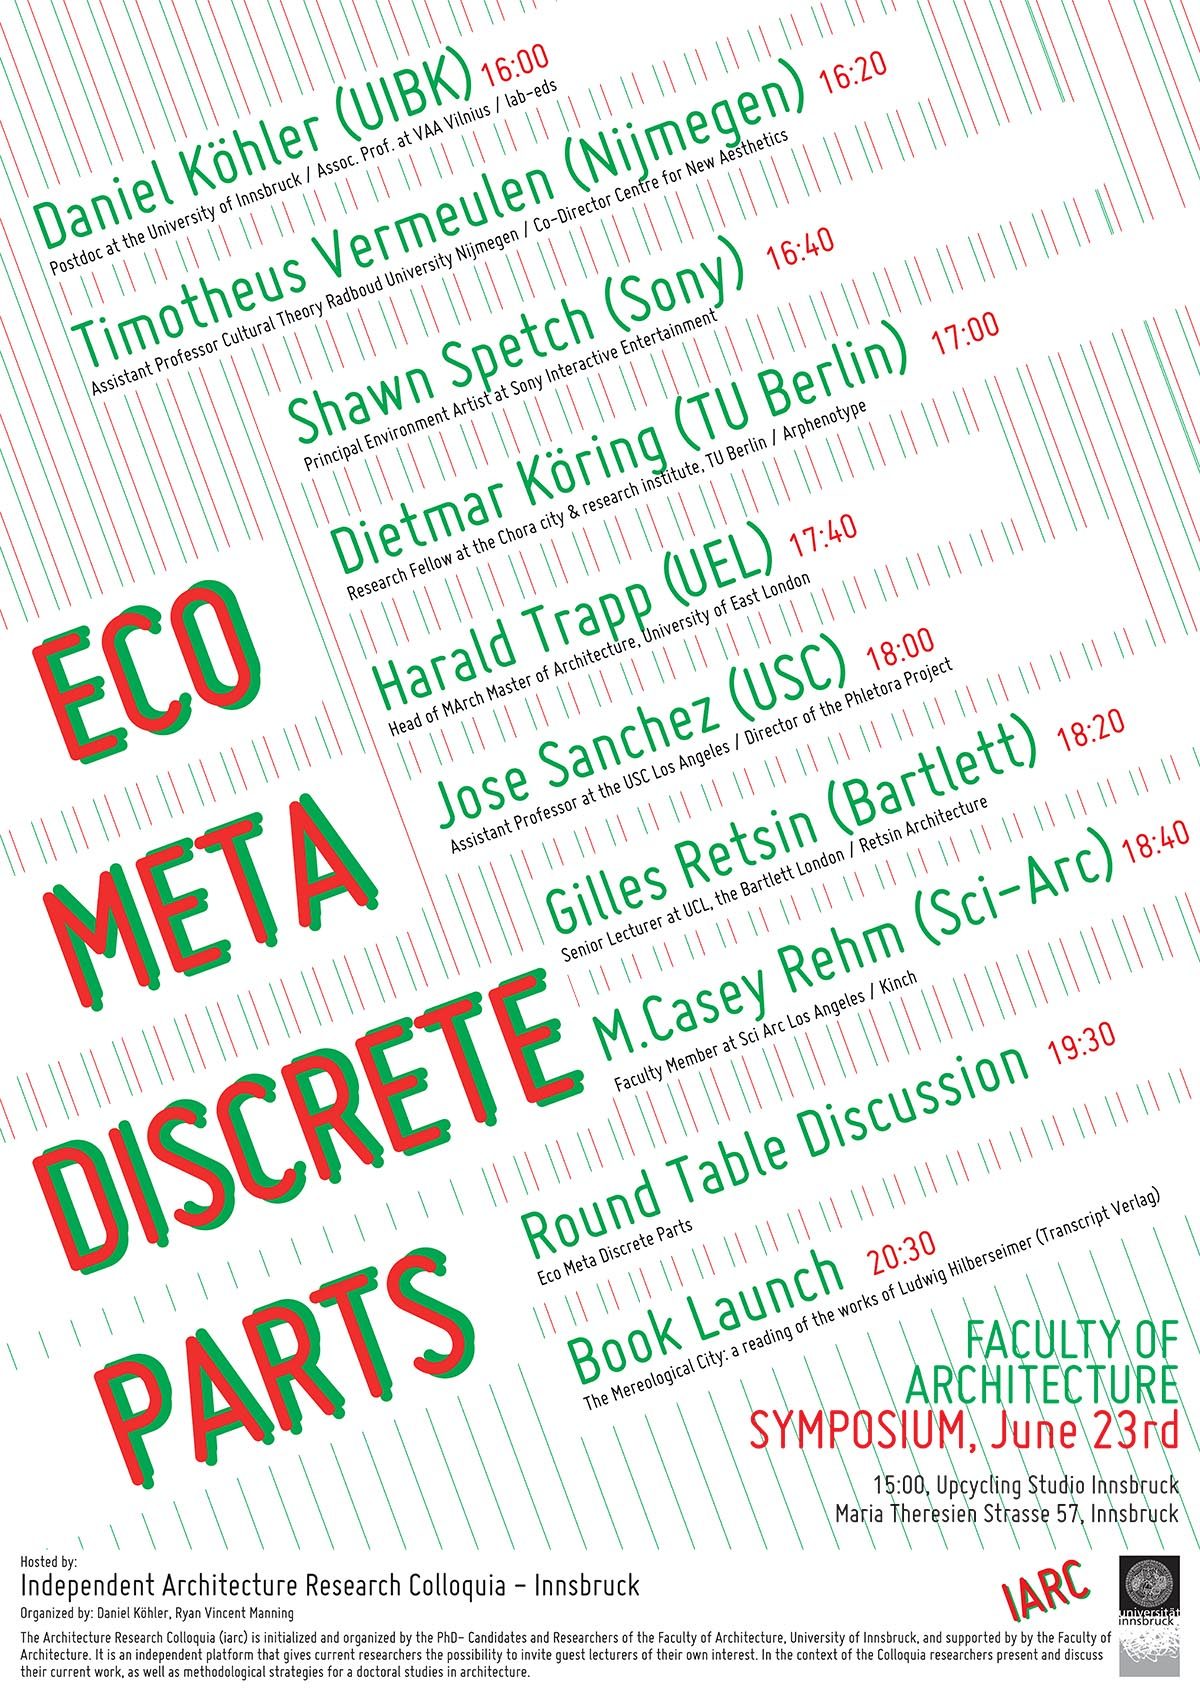 Eco Meta Discrete Parts Symposium